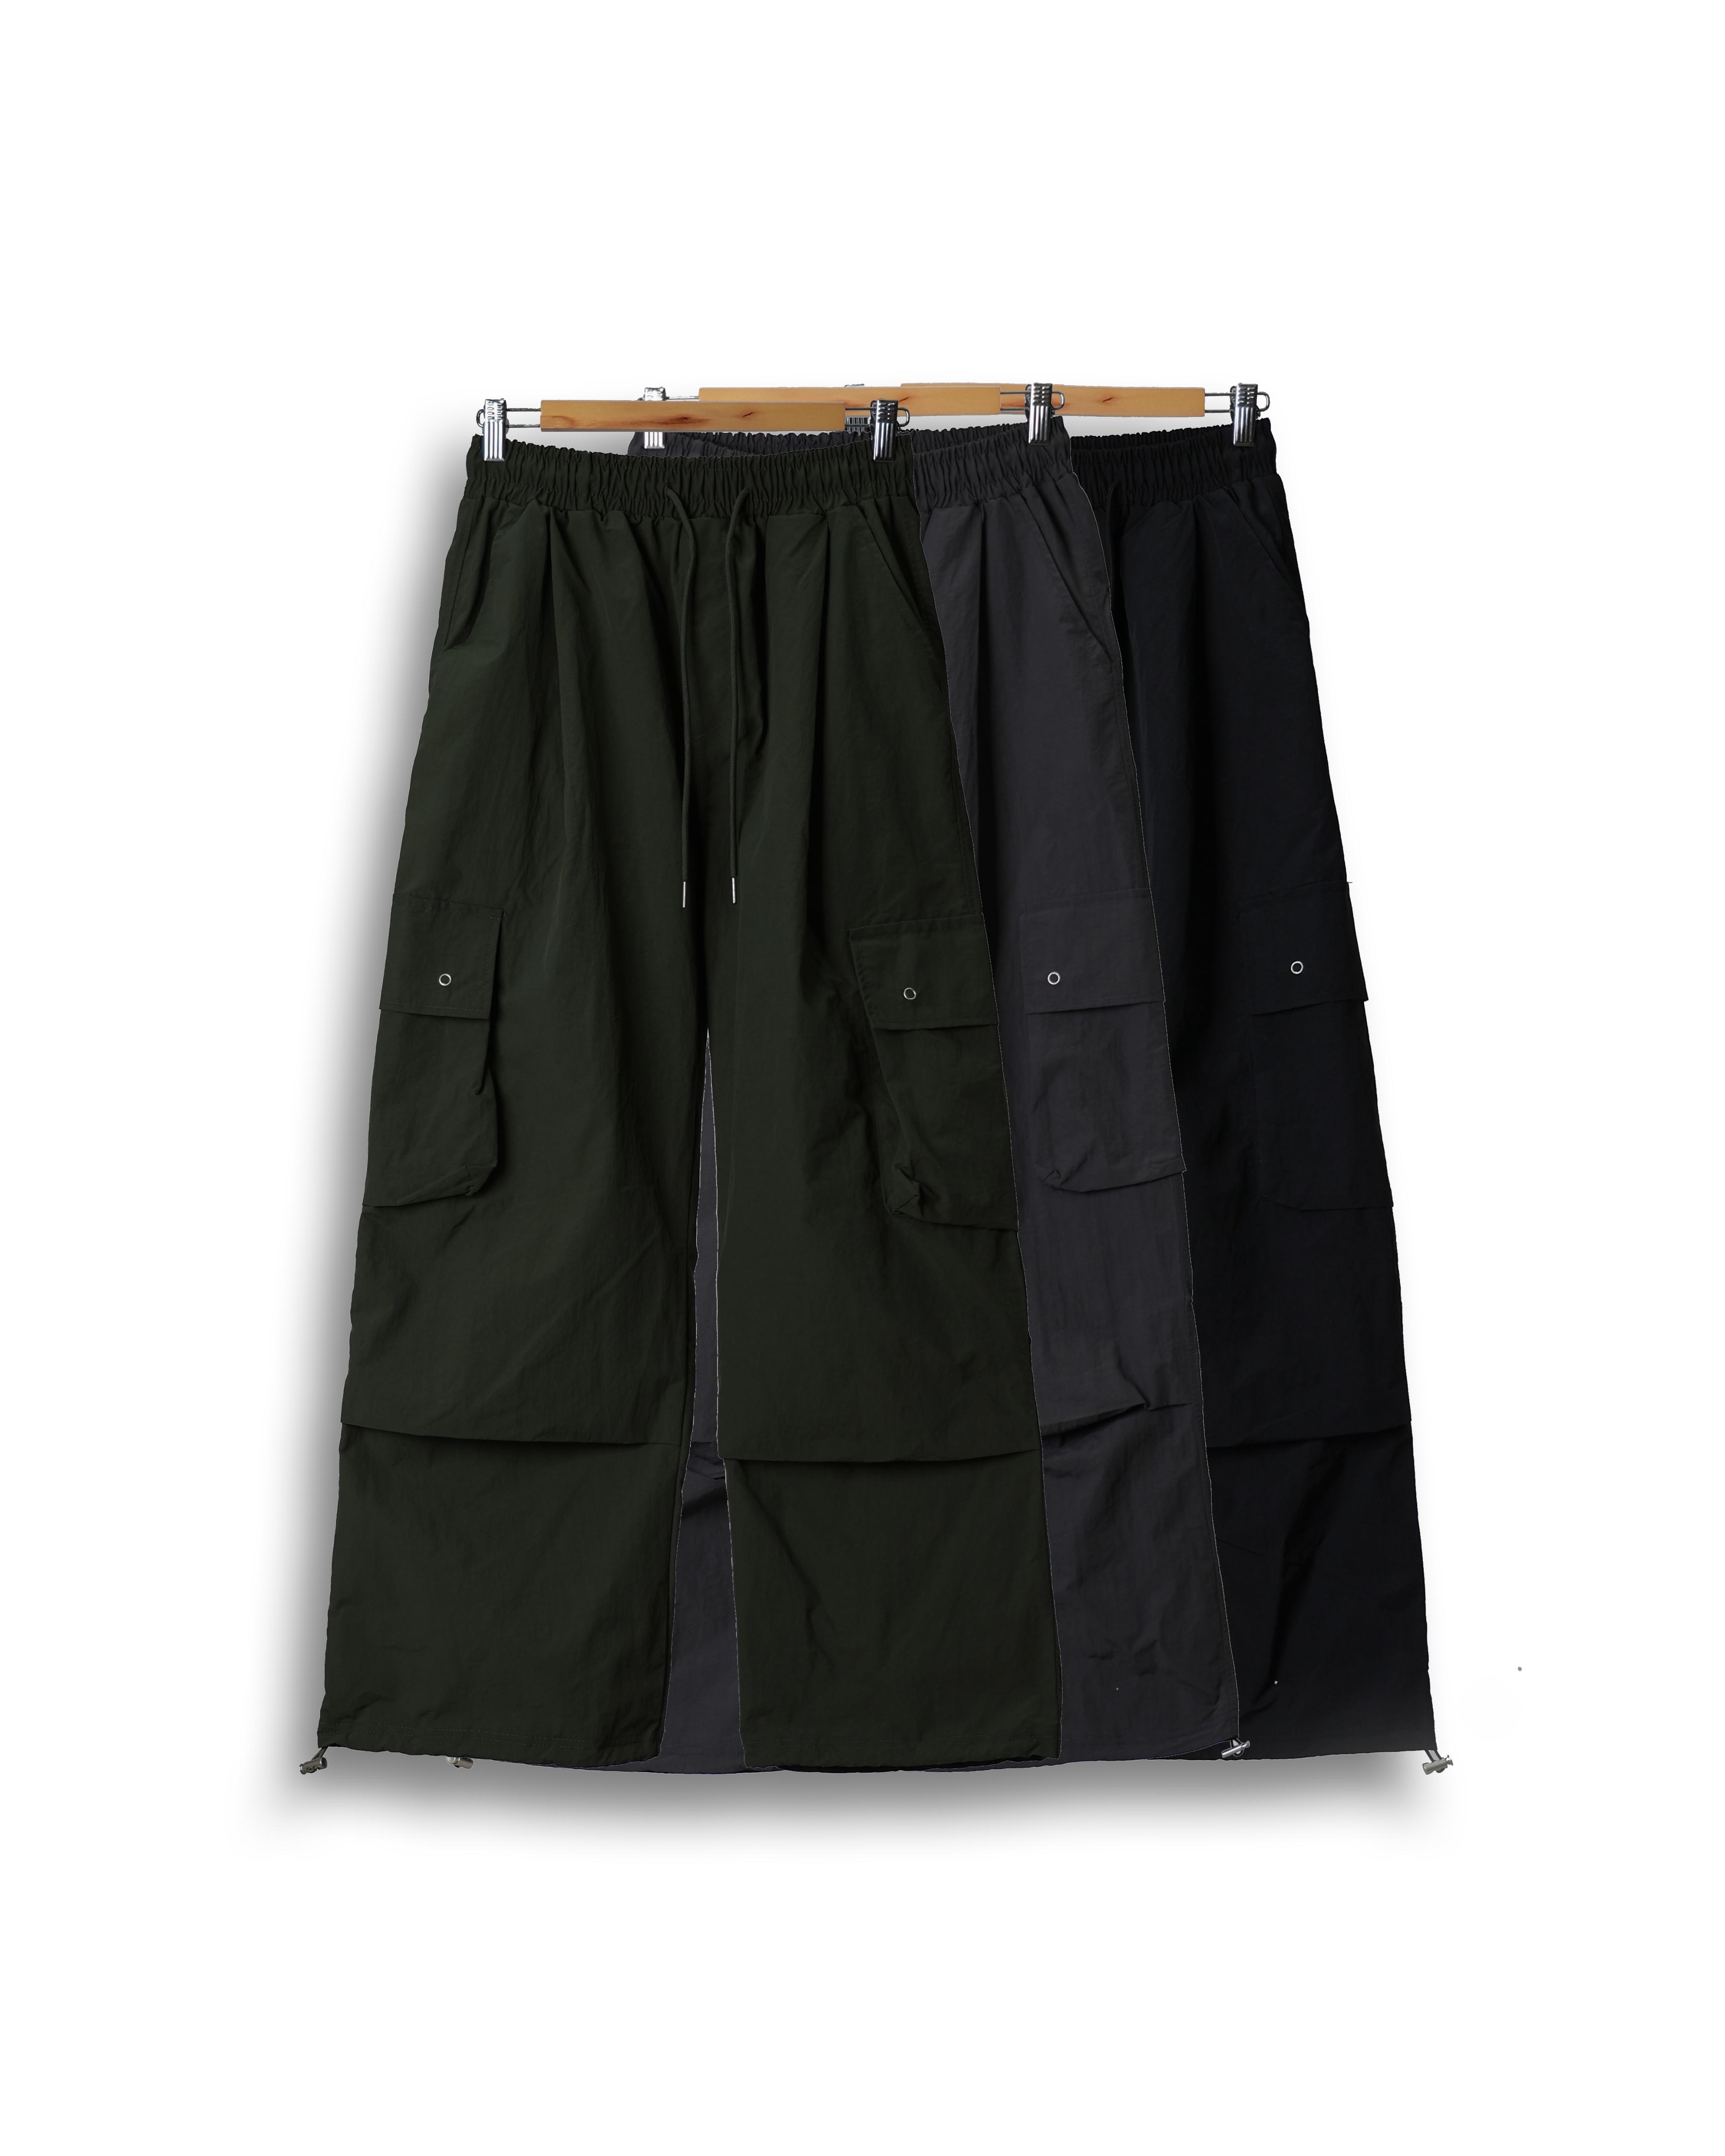 LUS PEENUT String Wide Nylon Pants (Black/Charcoal/Olive)